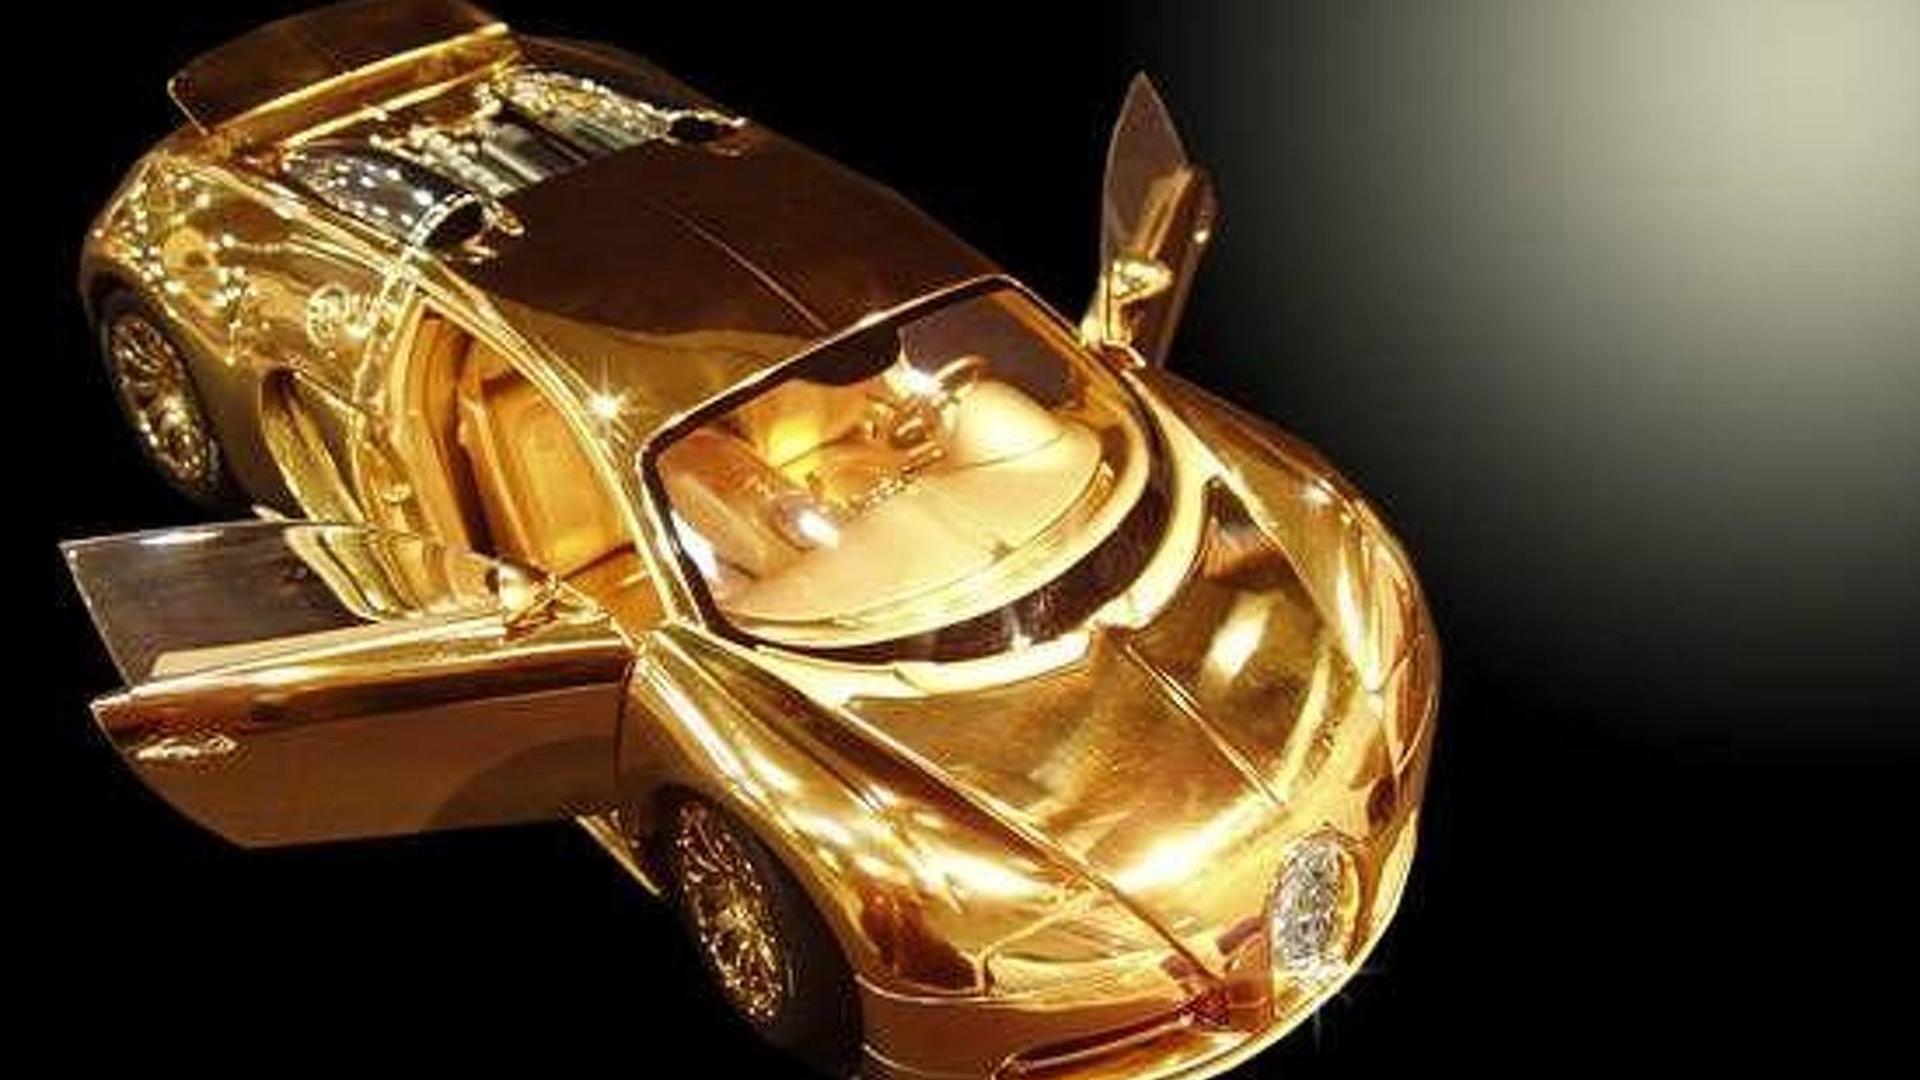 Gold Bugatti Wallpapers